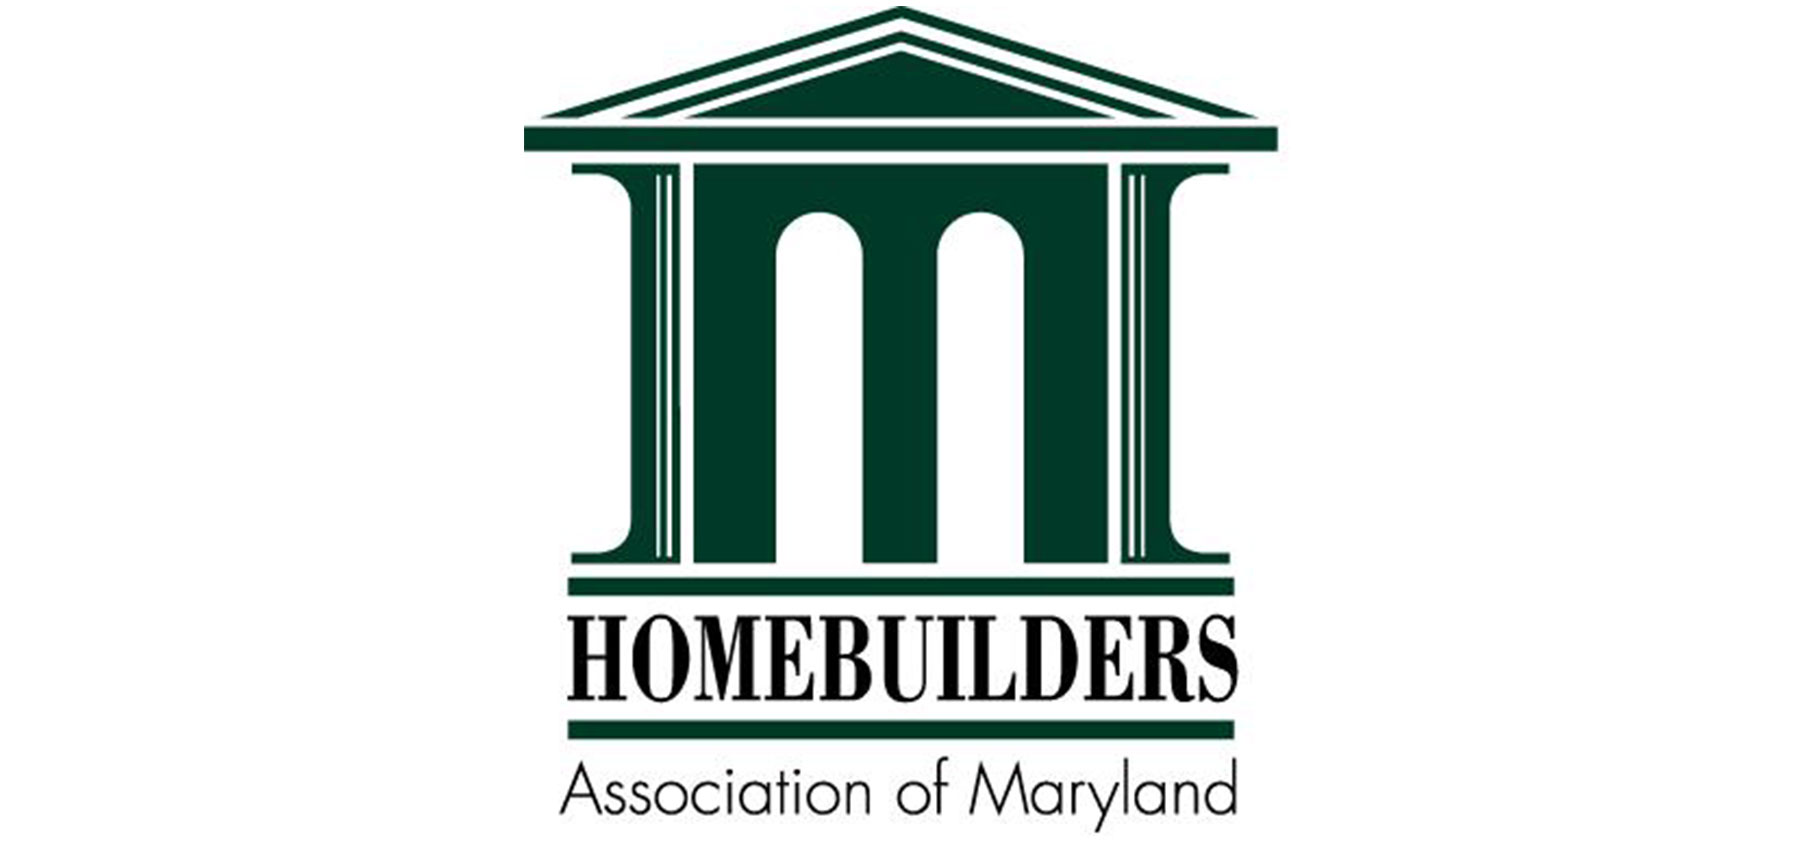 Homebuilders association of maryland logo